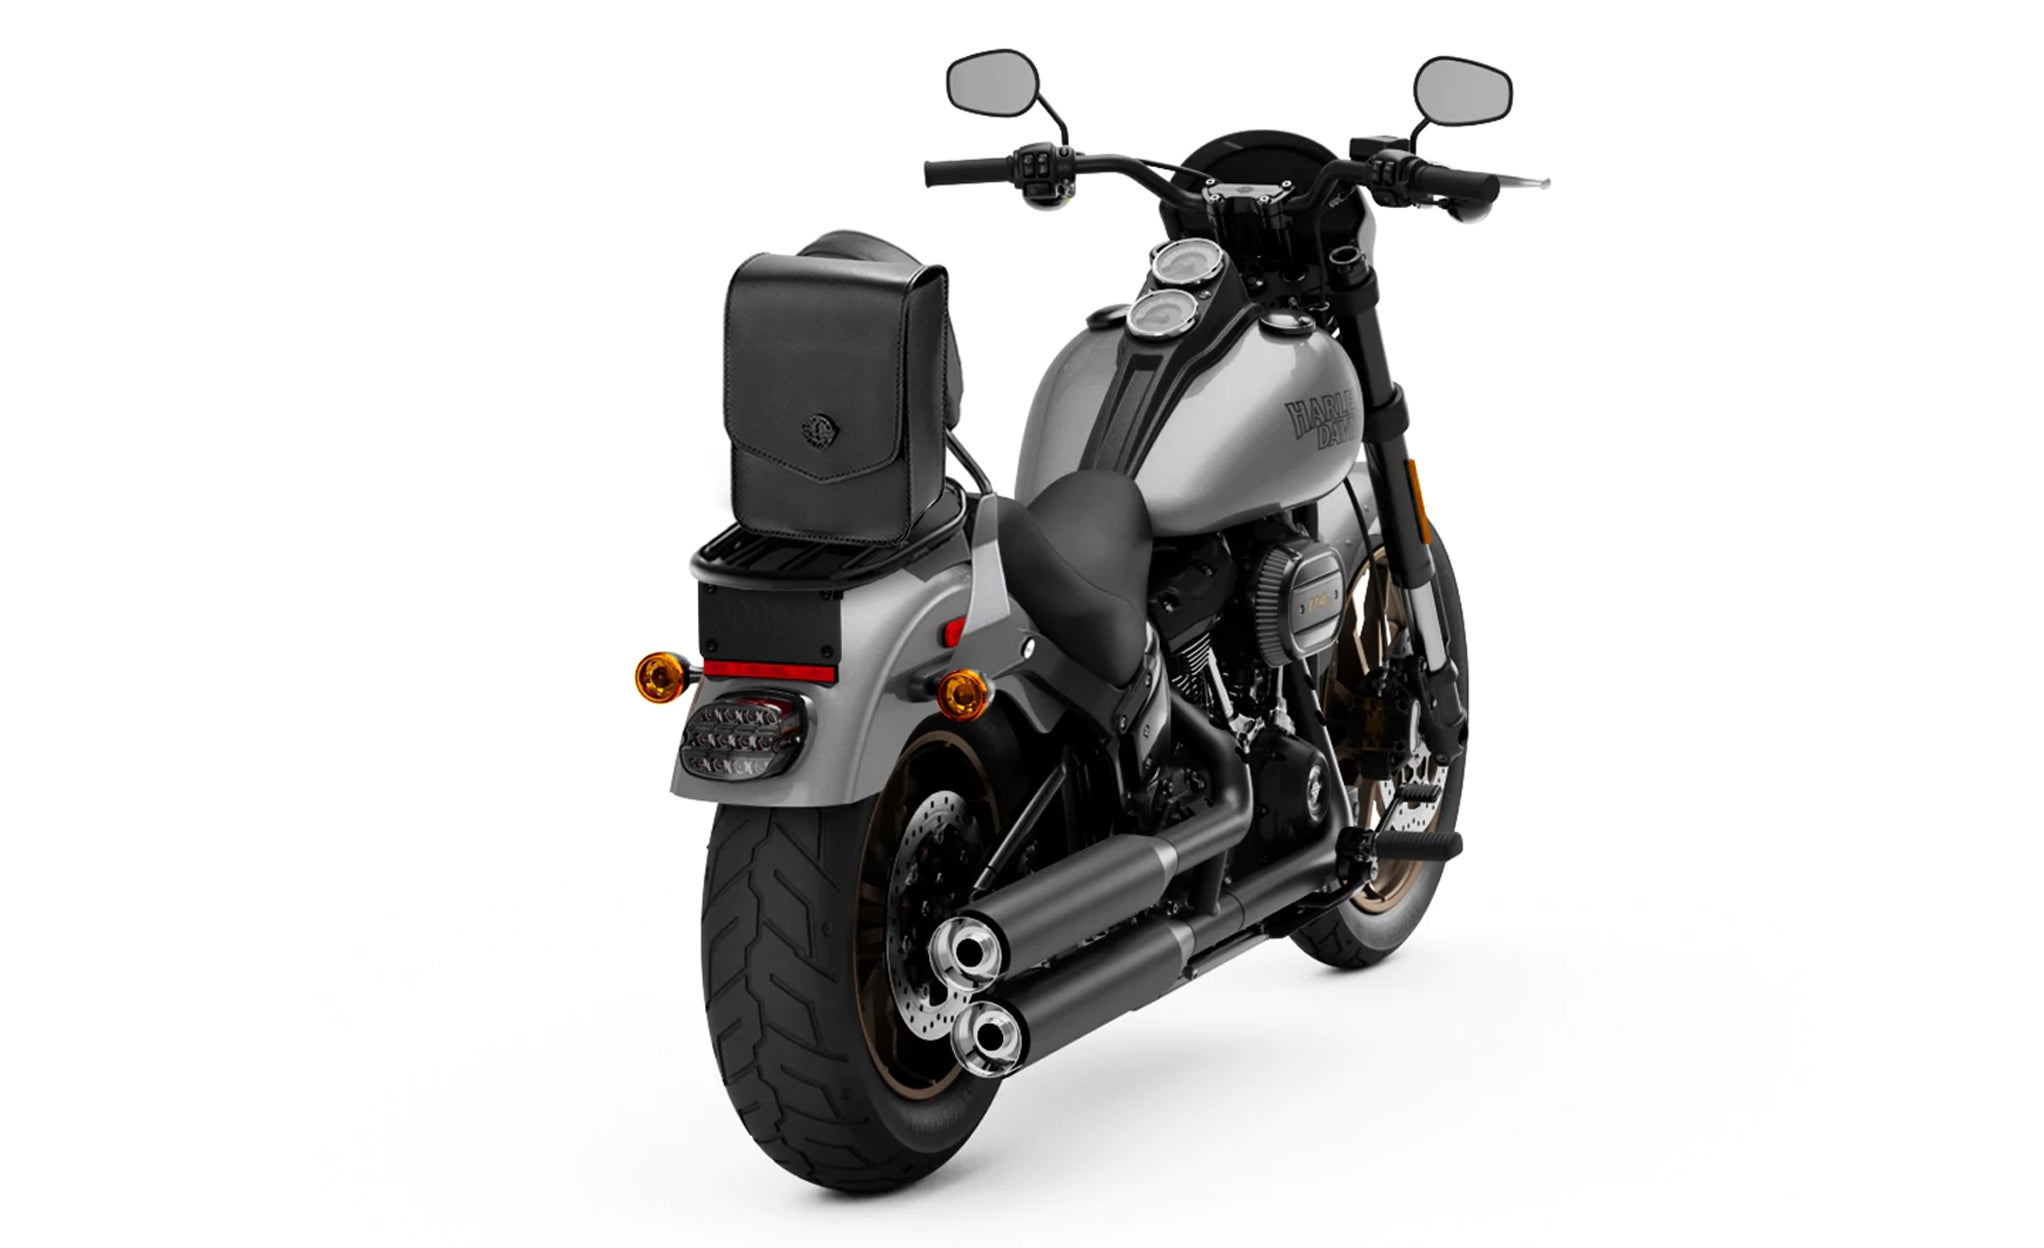 Viking Dark Age Small Yamaha Motorcycle Sissy Bar Bag Bag on Bike View @expand